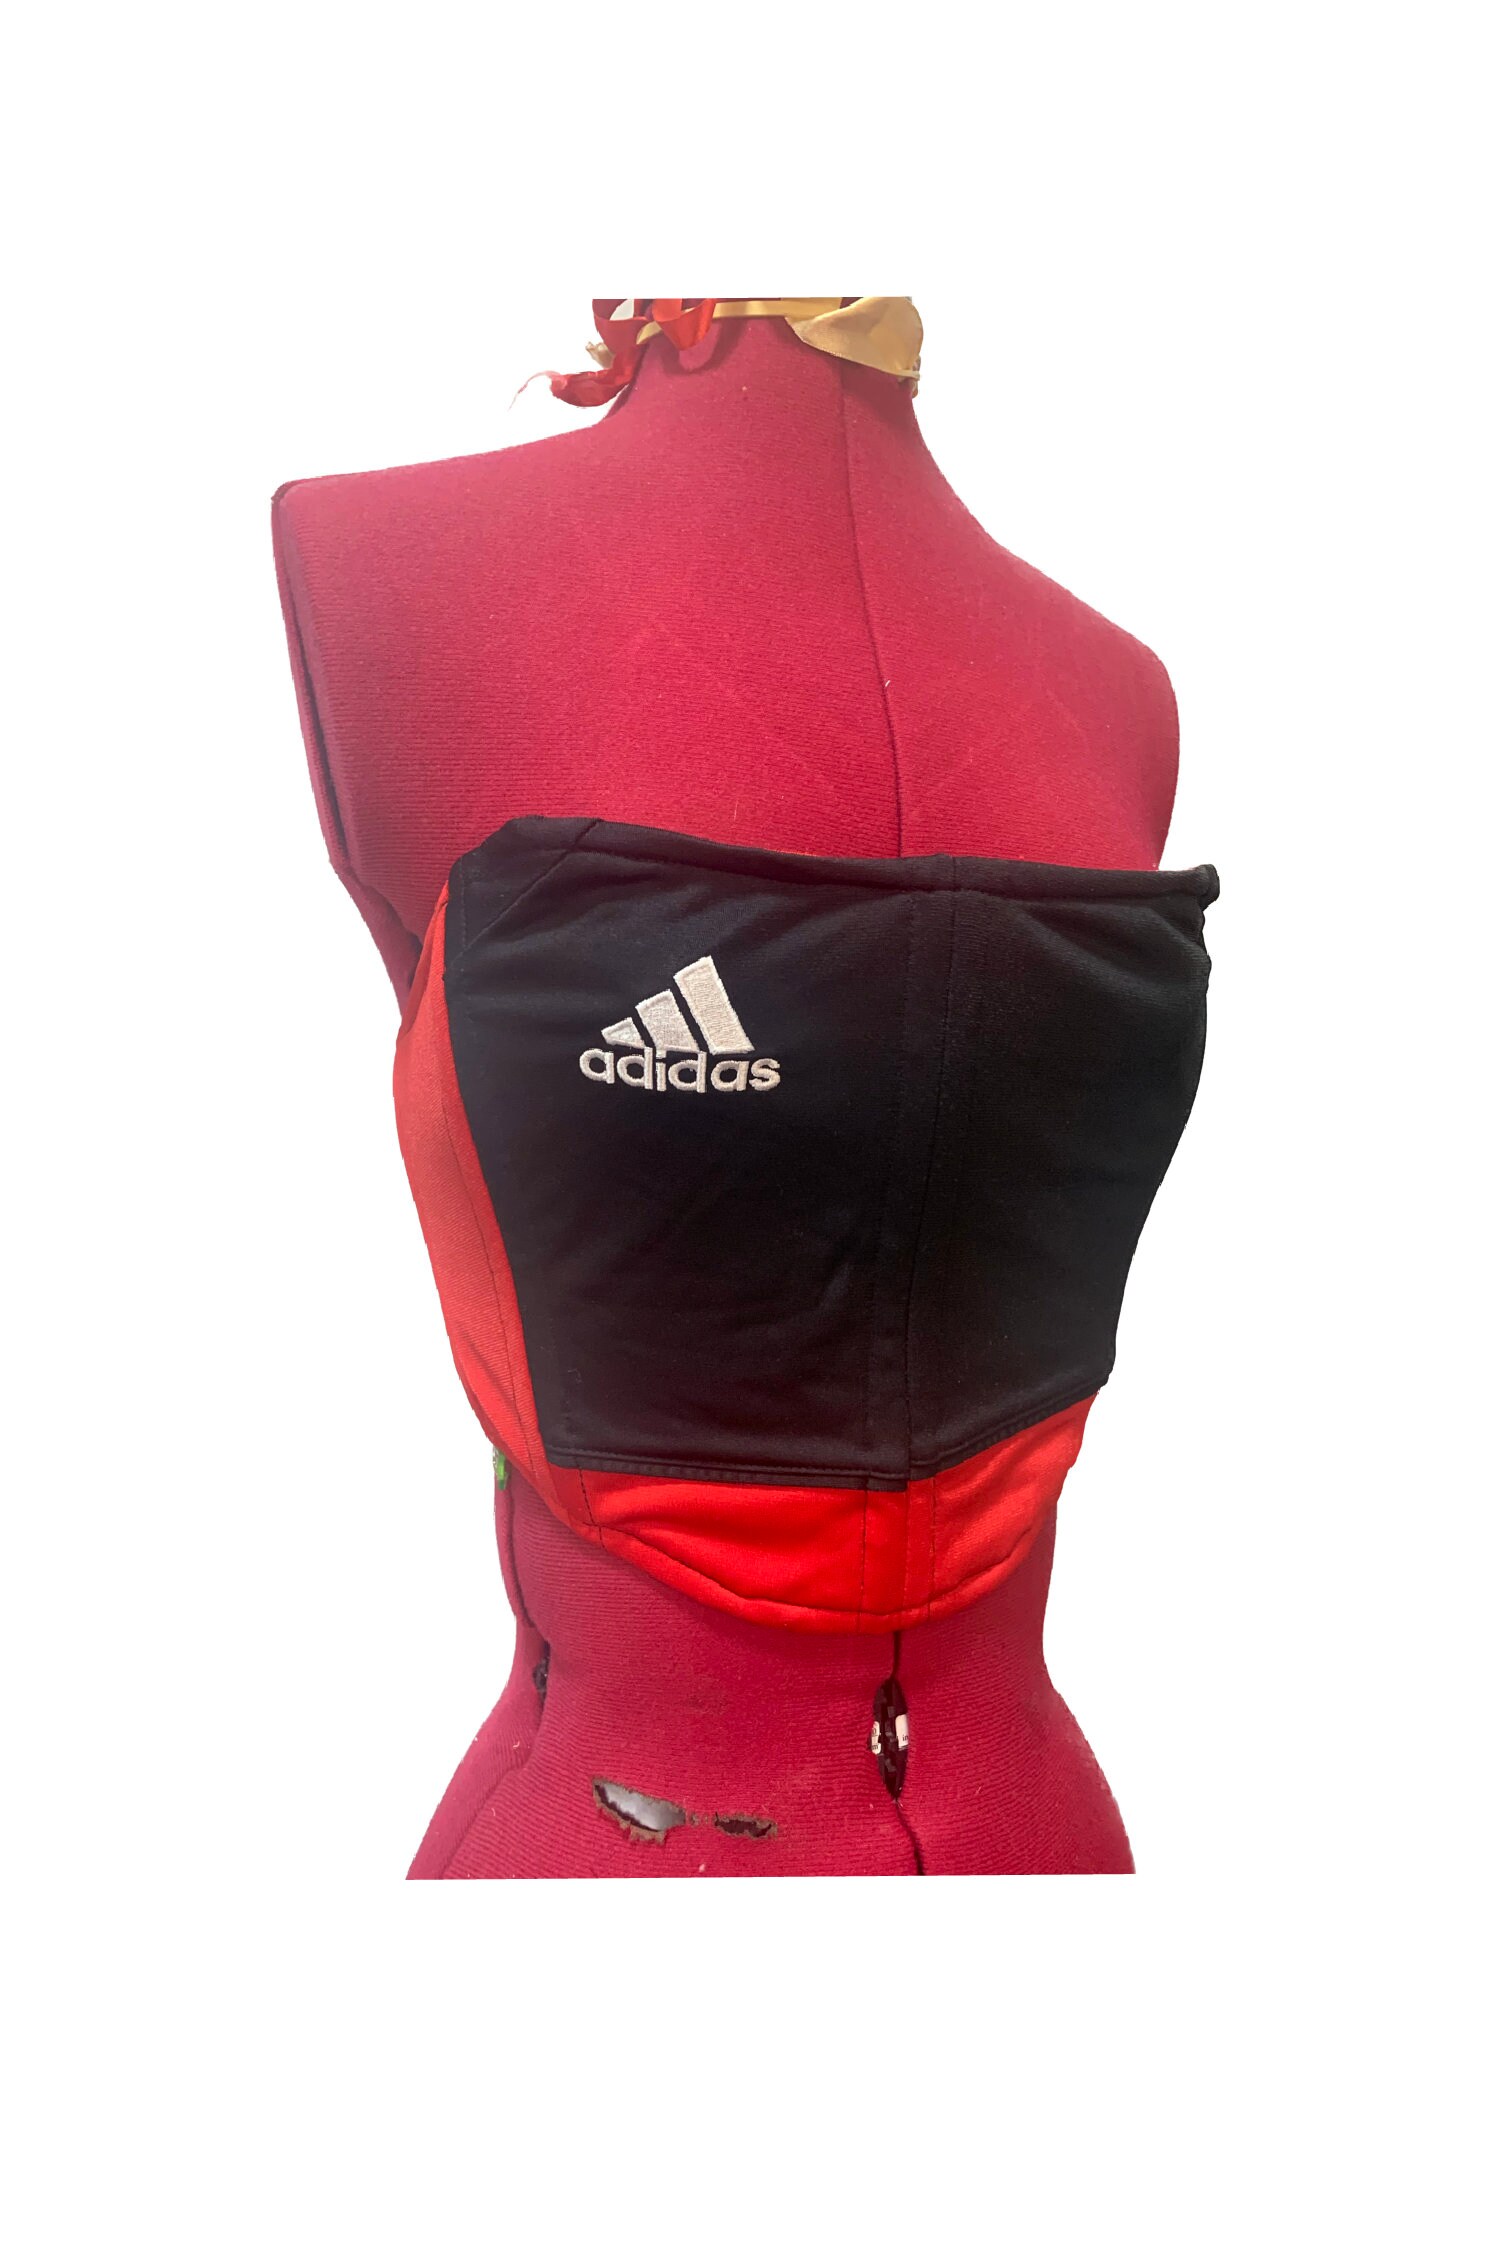 Bestuurbaar lip noorden Fashion Corset Red and Black Upcycled Adidas UK 6 UK 12 - Etsy